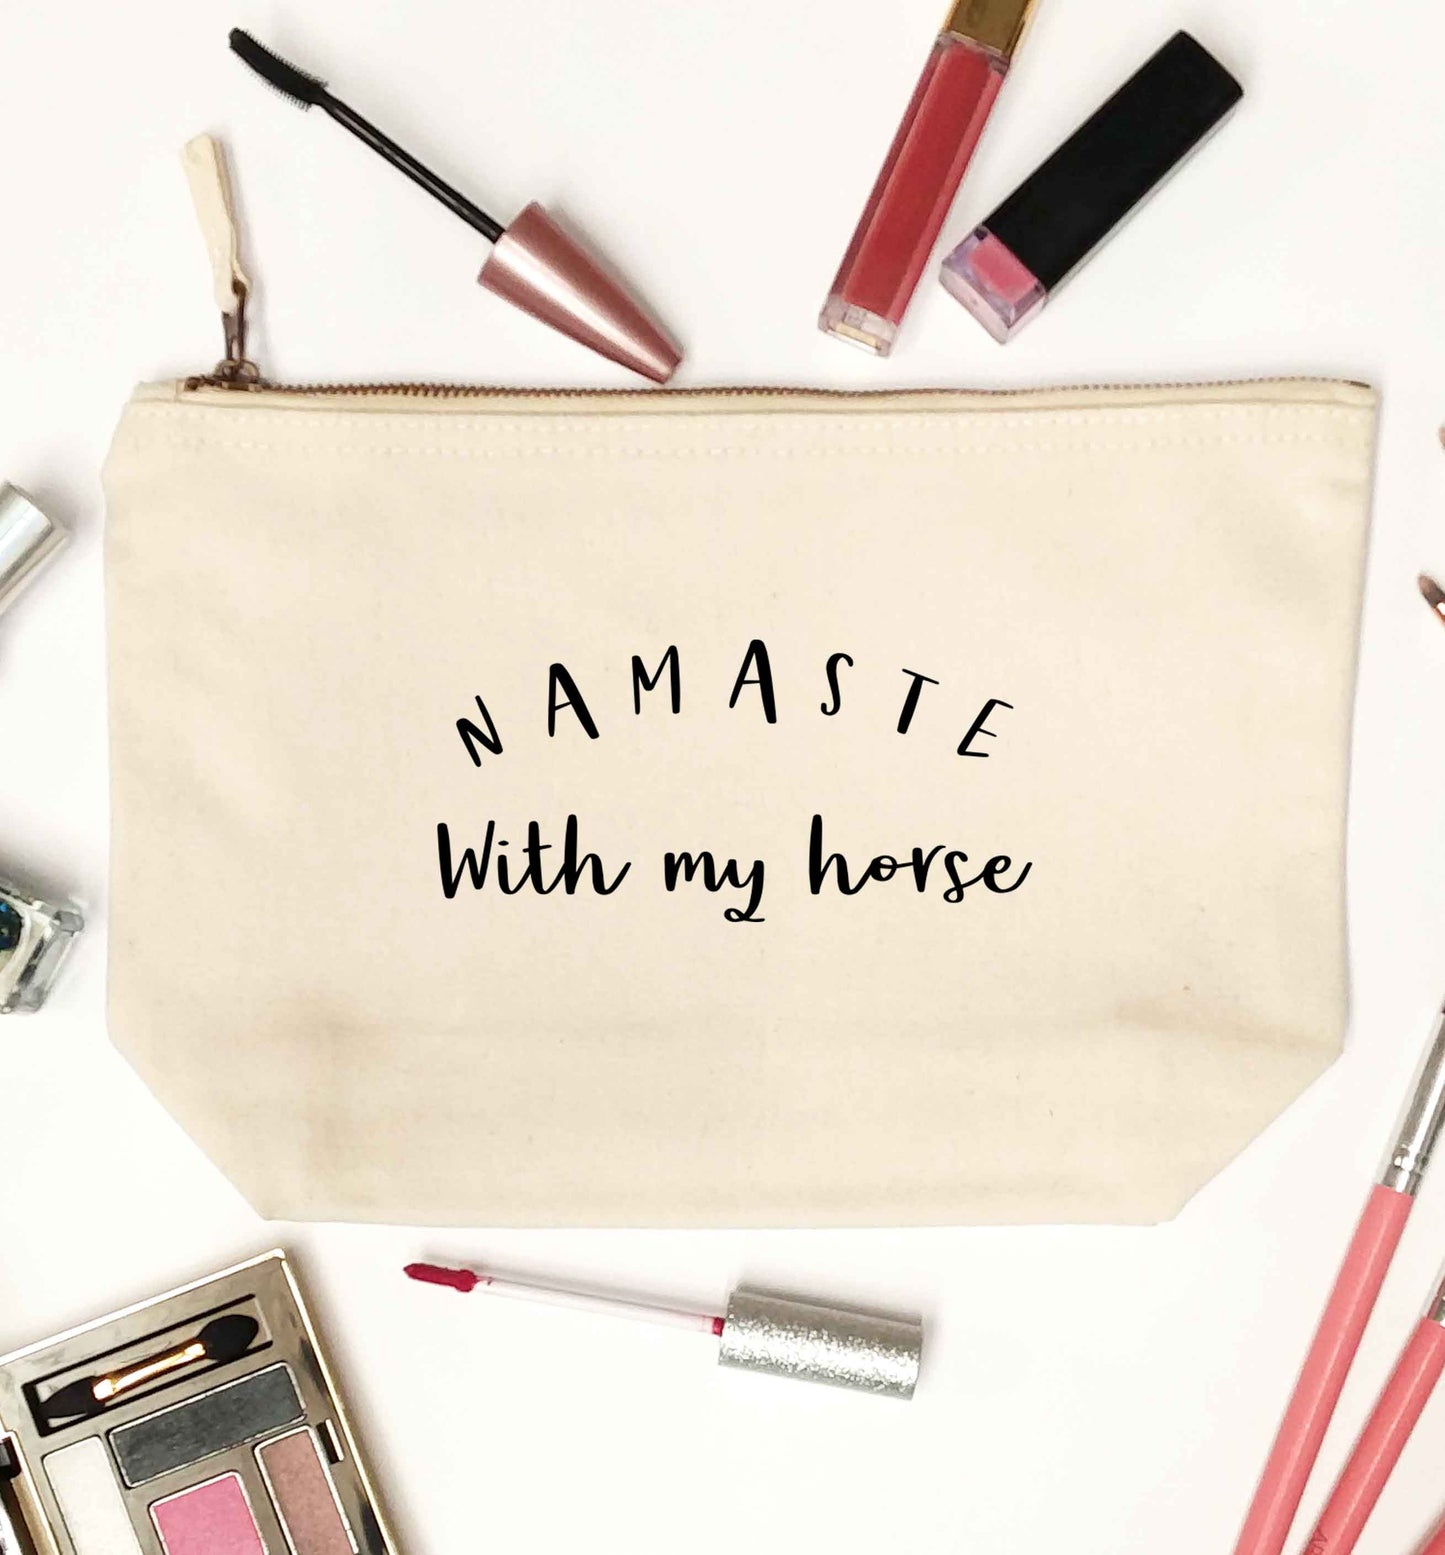 Namaste with my horse natural makeup bag